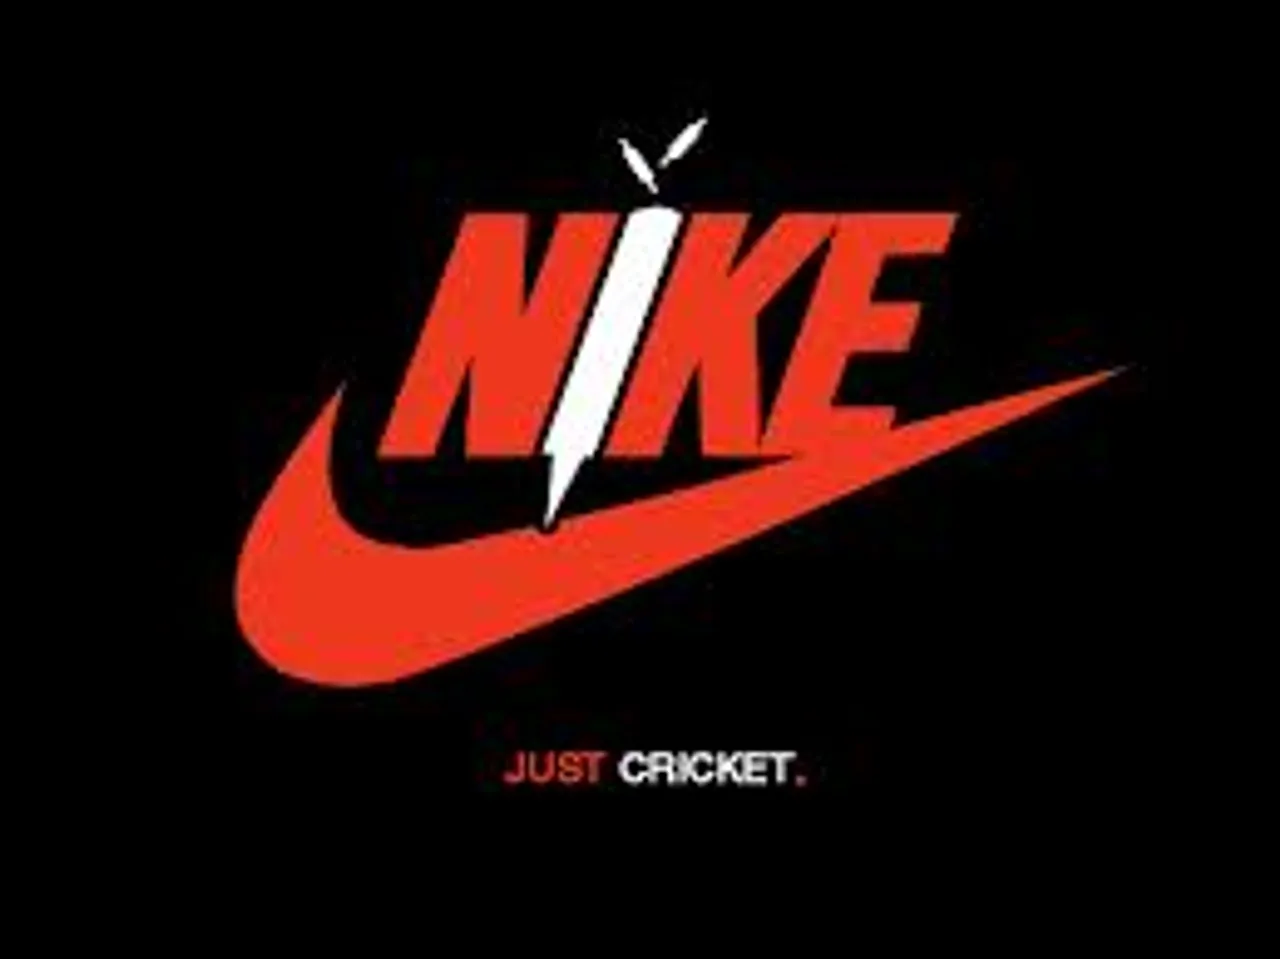 Social Media Strategy Review: Nike Cricket